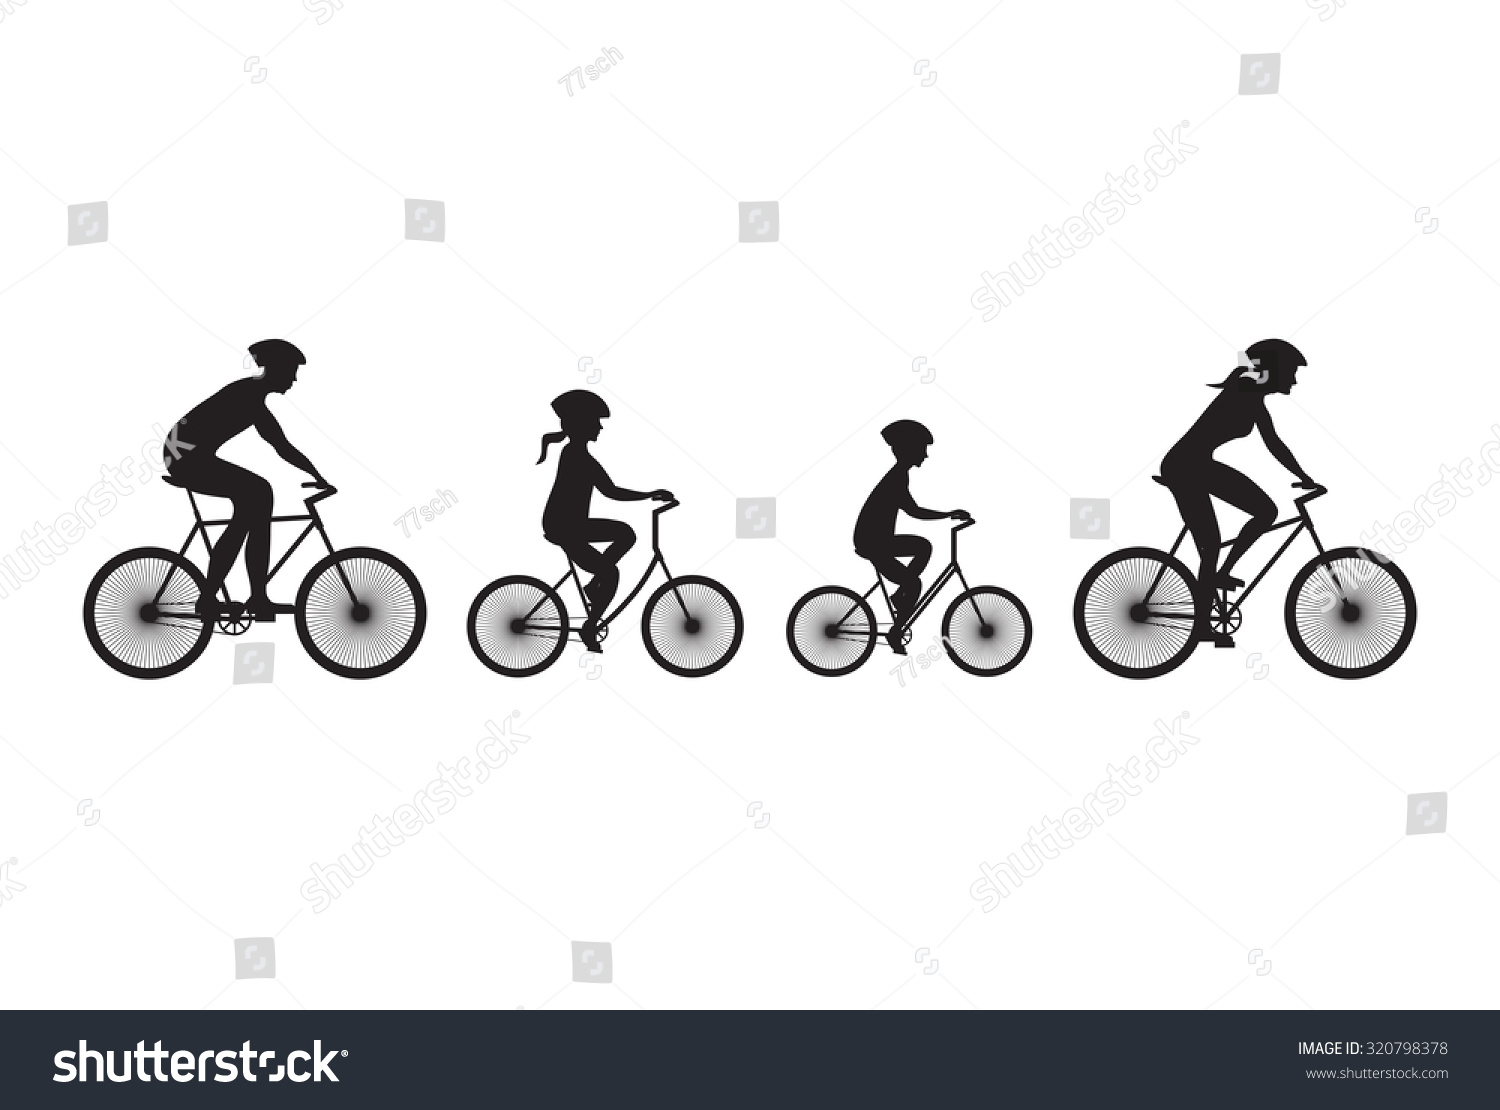 family bike ride clipart - photo #14